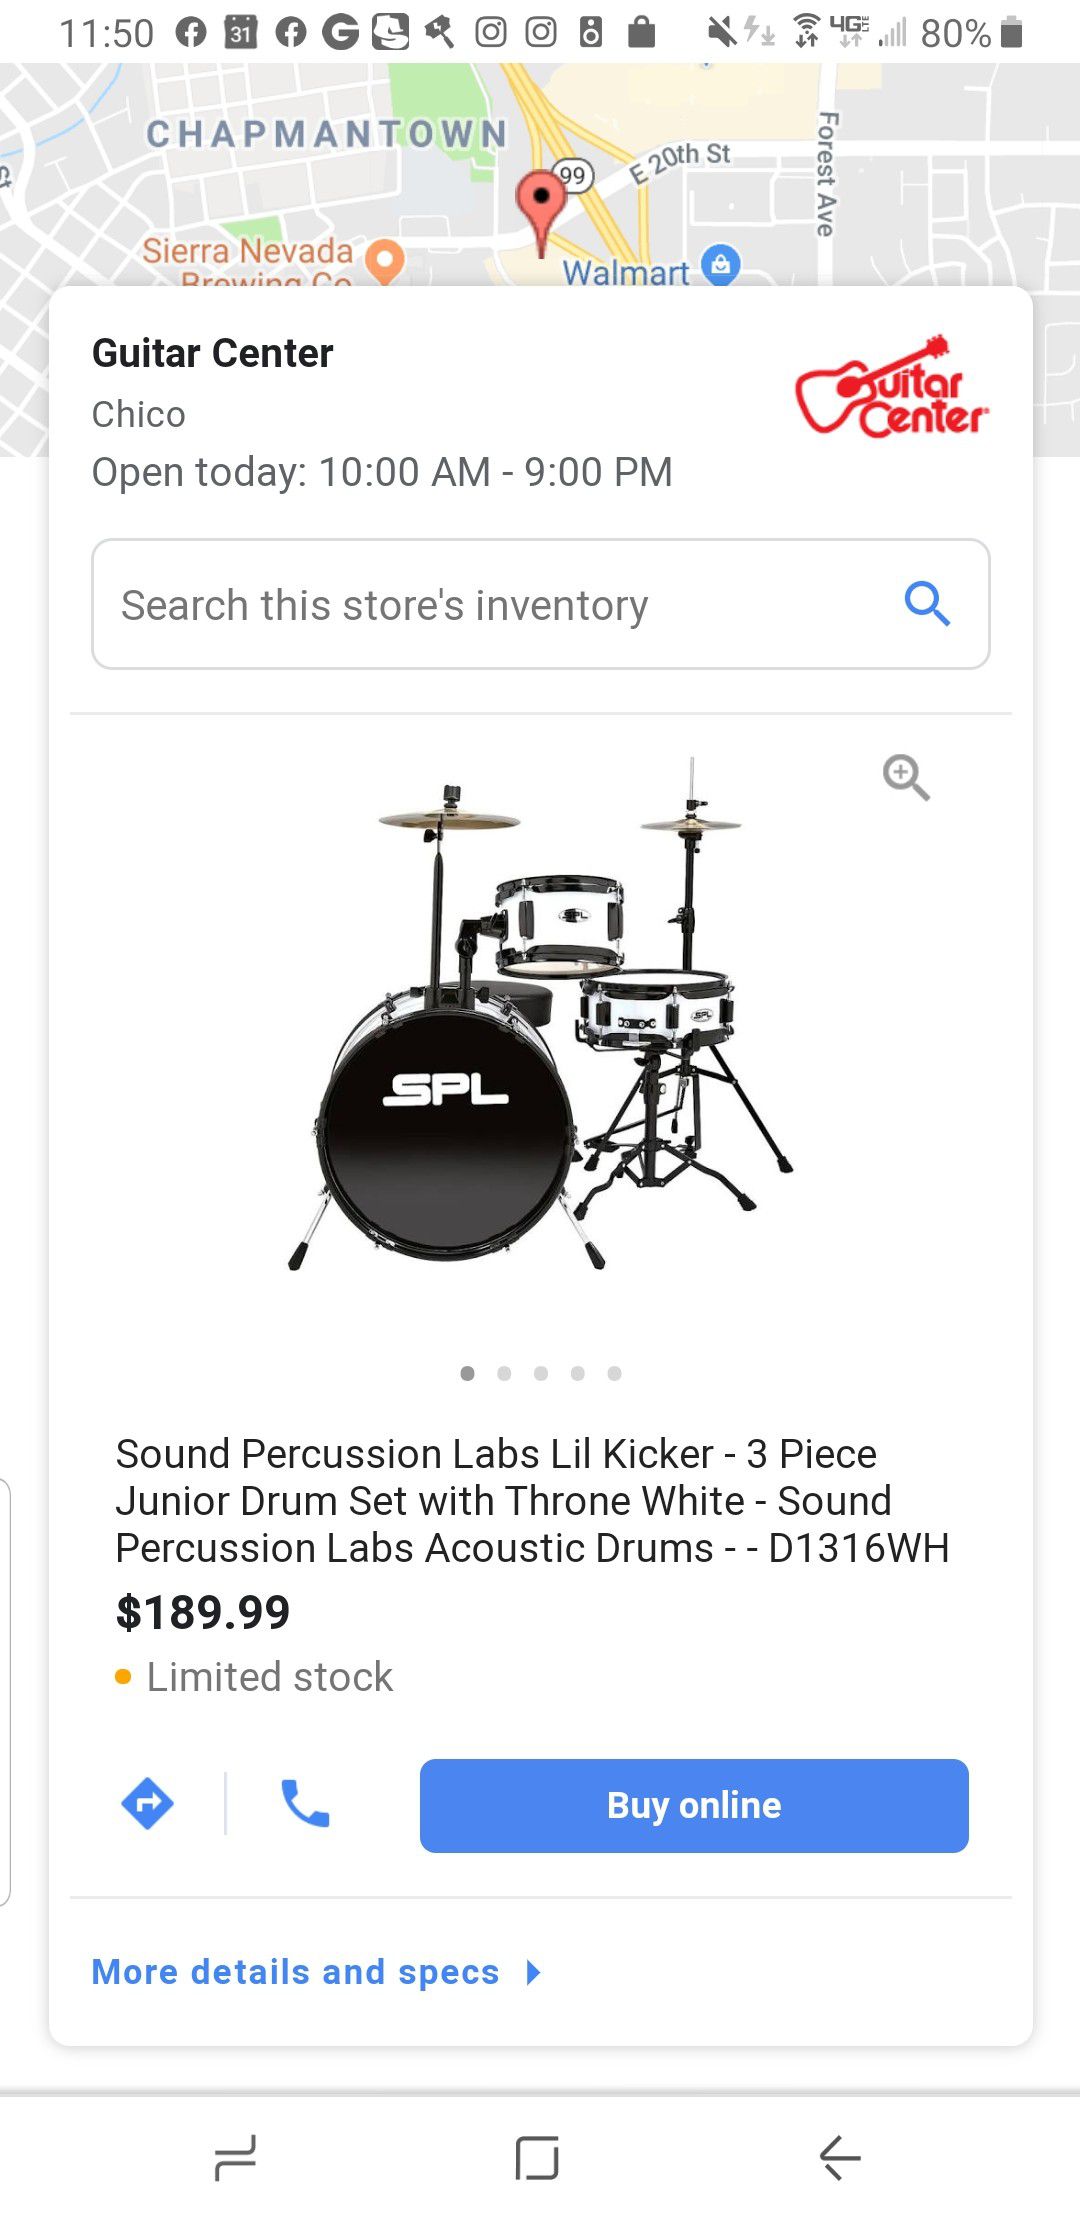 SPL pro drum set for kids